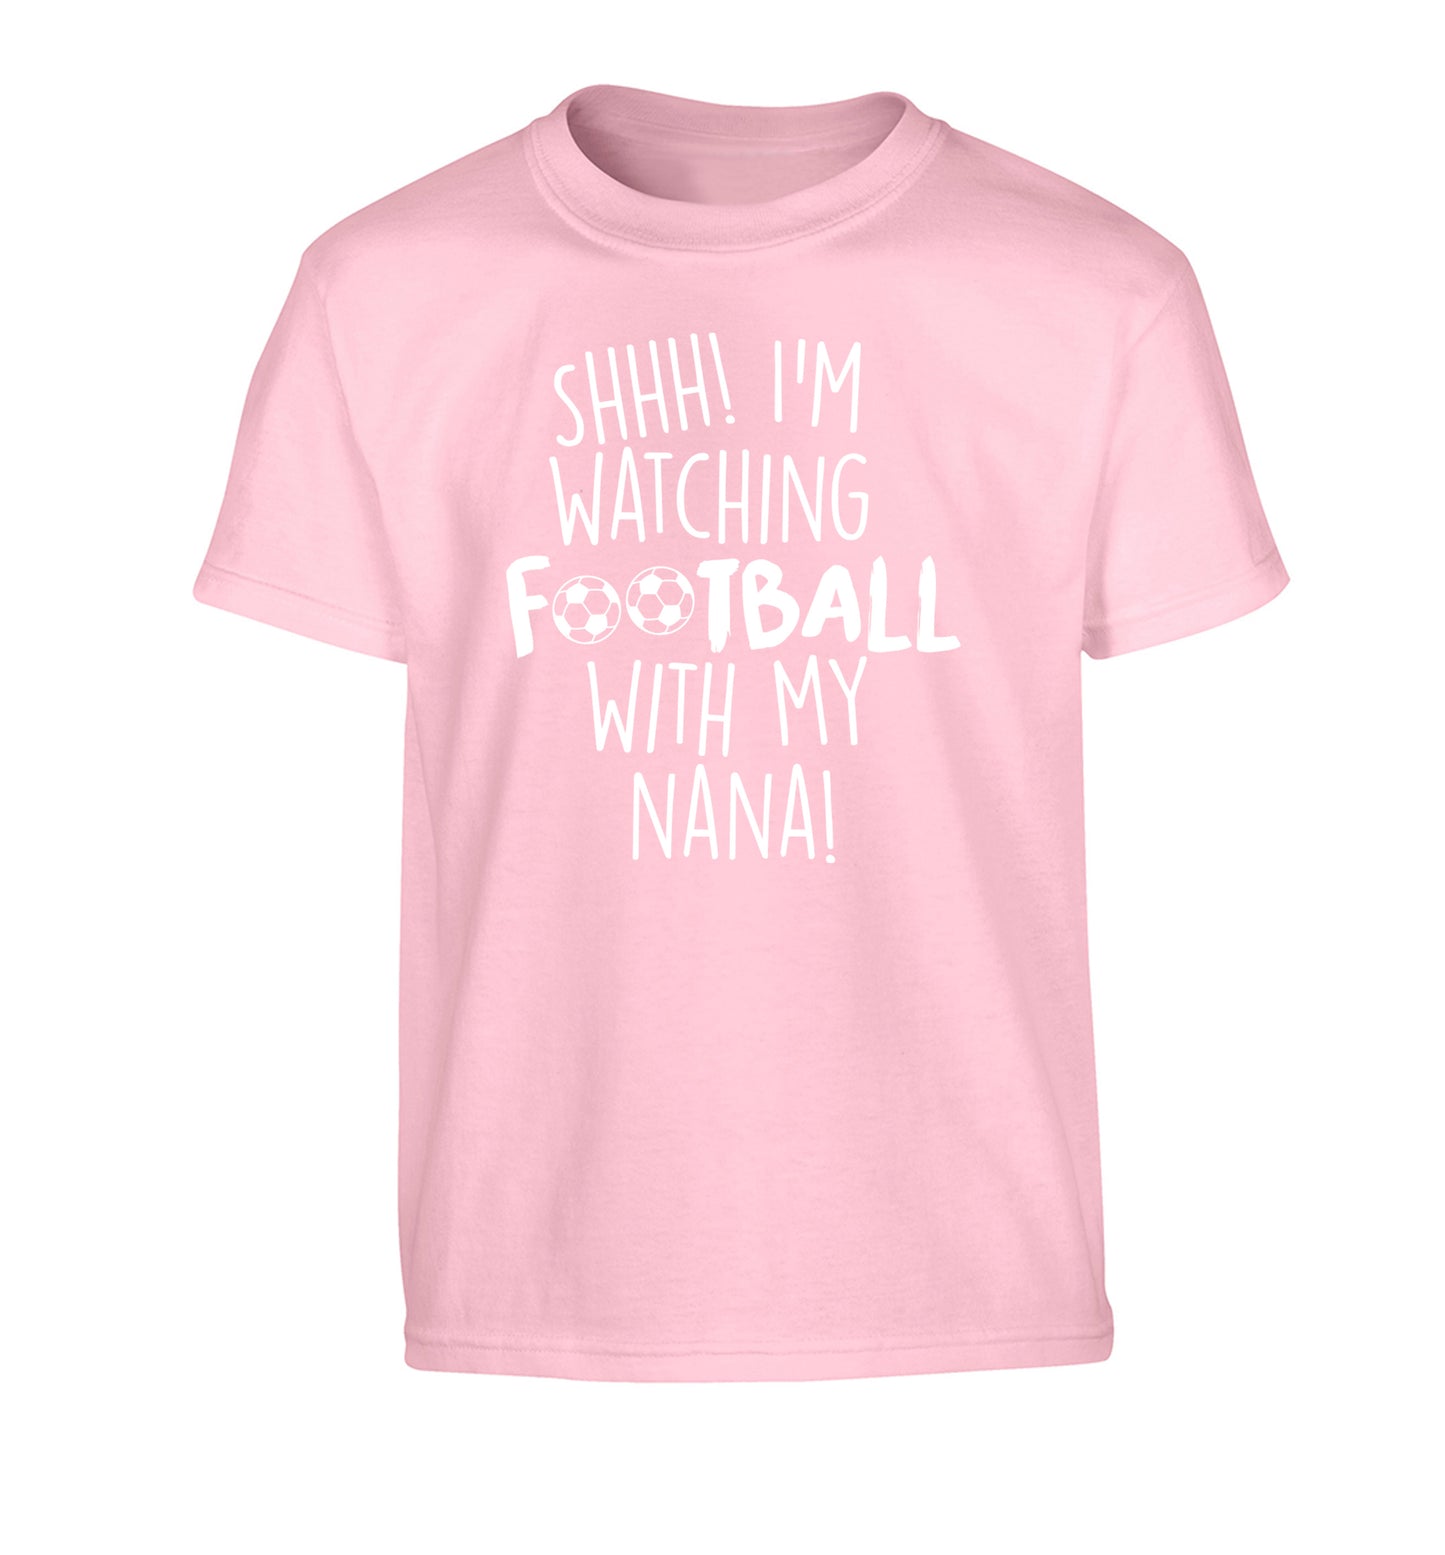 Shhh I'm watching football with my nana Children's light pink Tshirt 12-14 Years